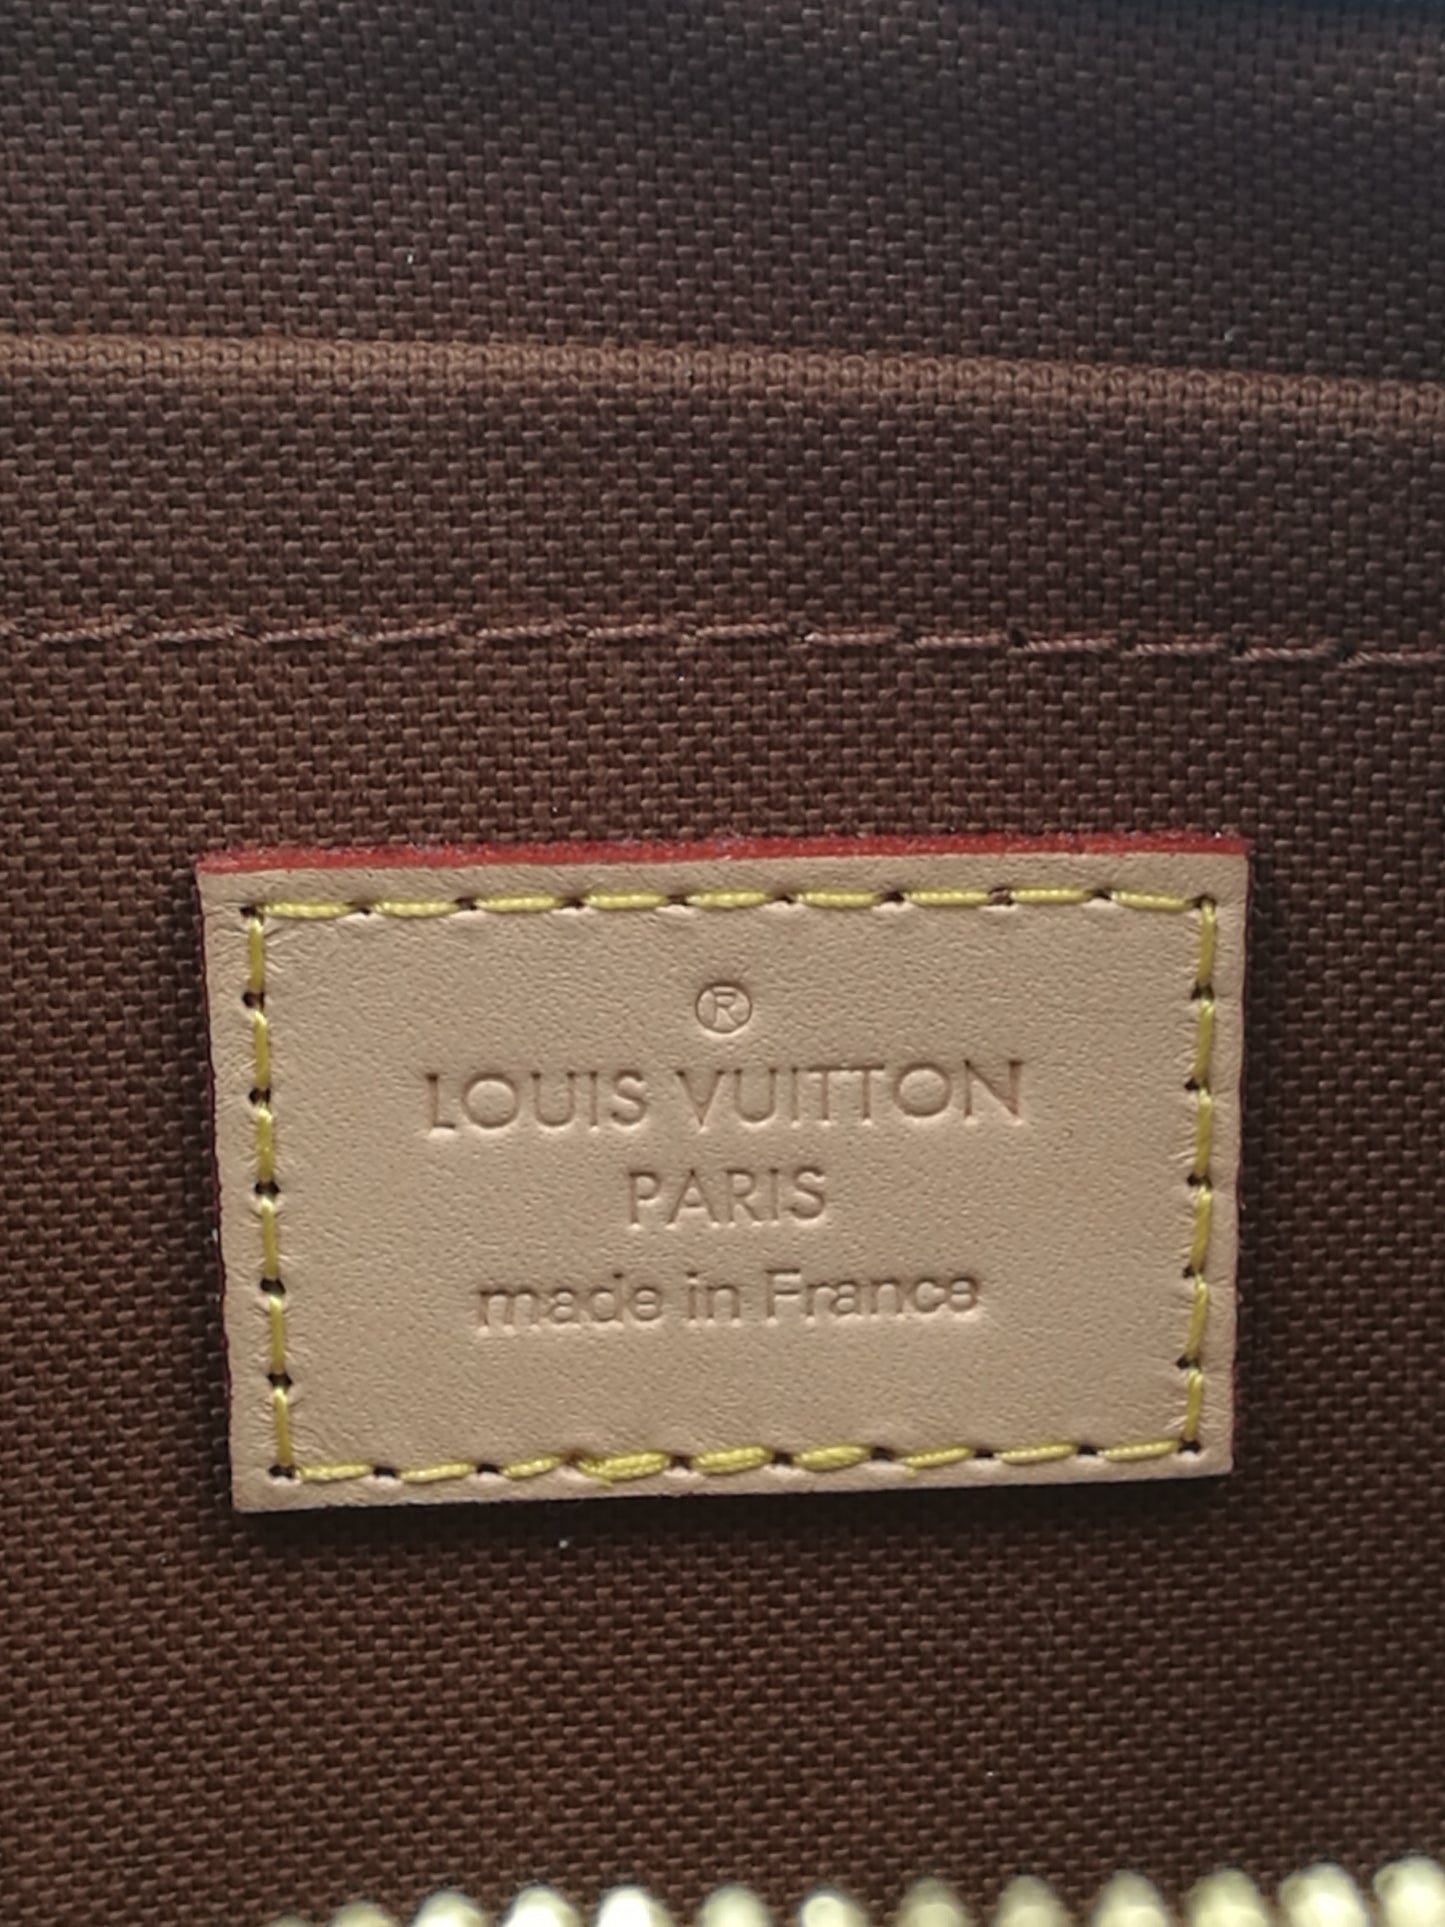 Louis Vuitton multi pochette kaki